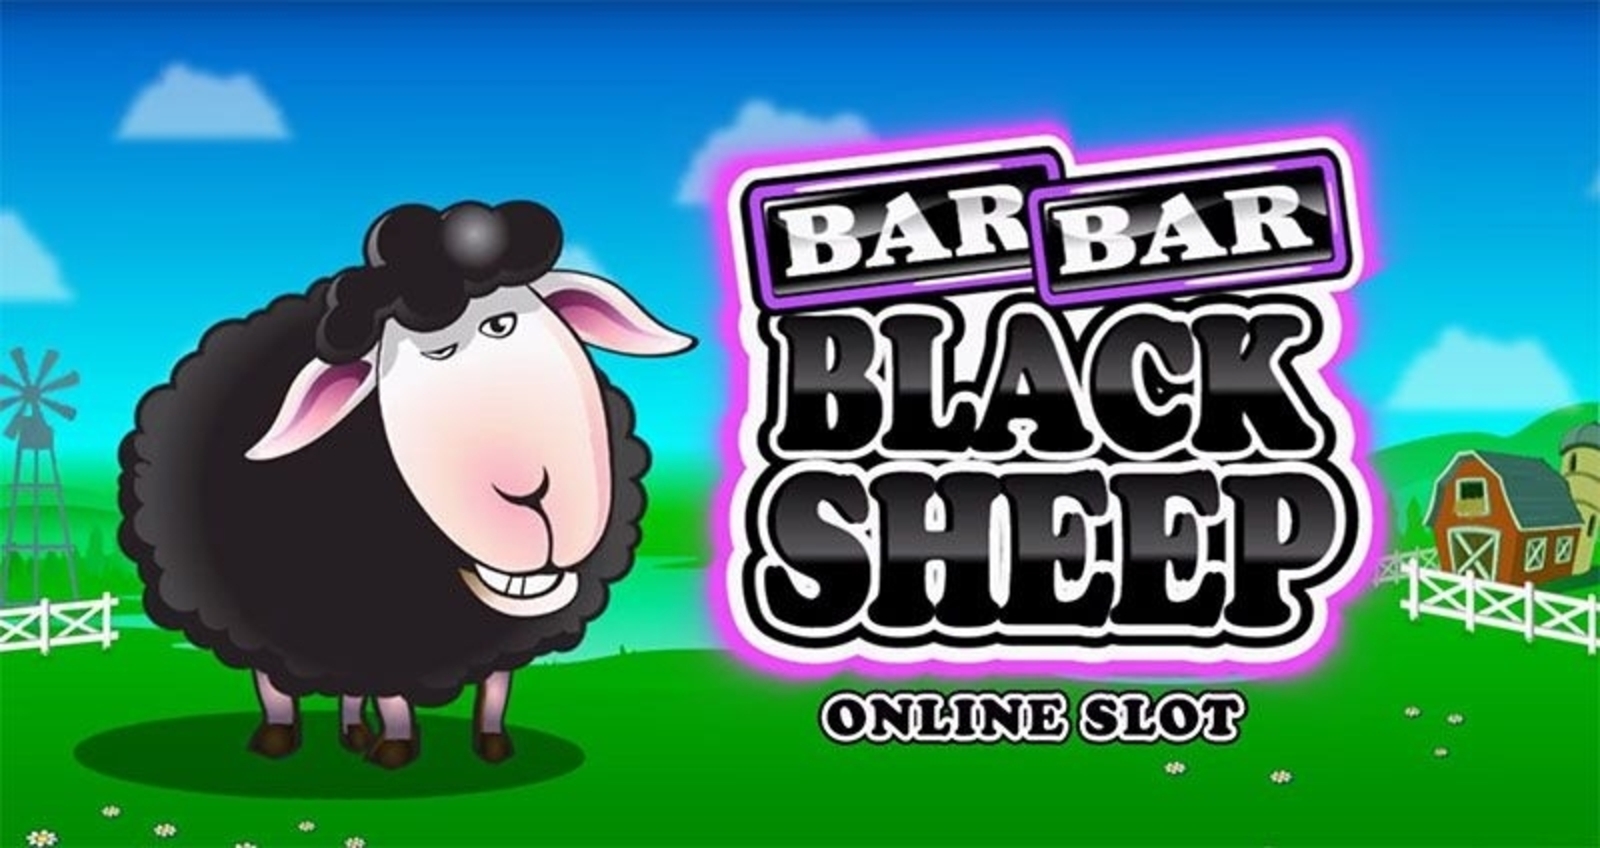 Bar Bar Black Sheep demo